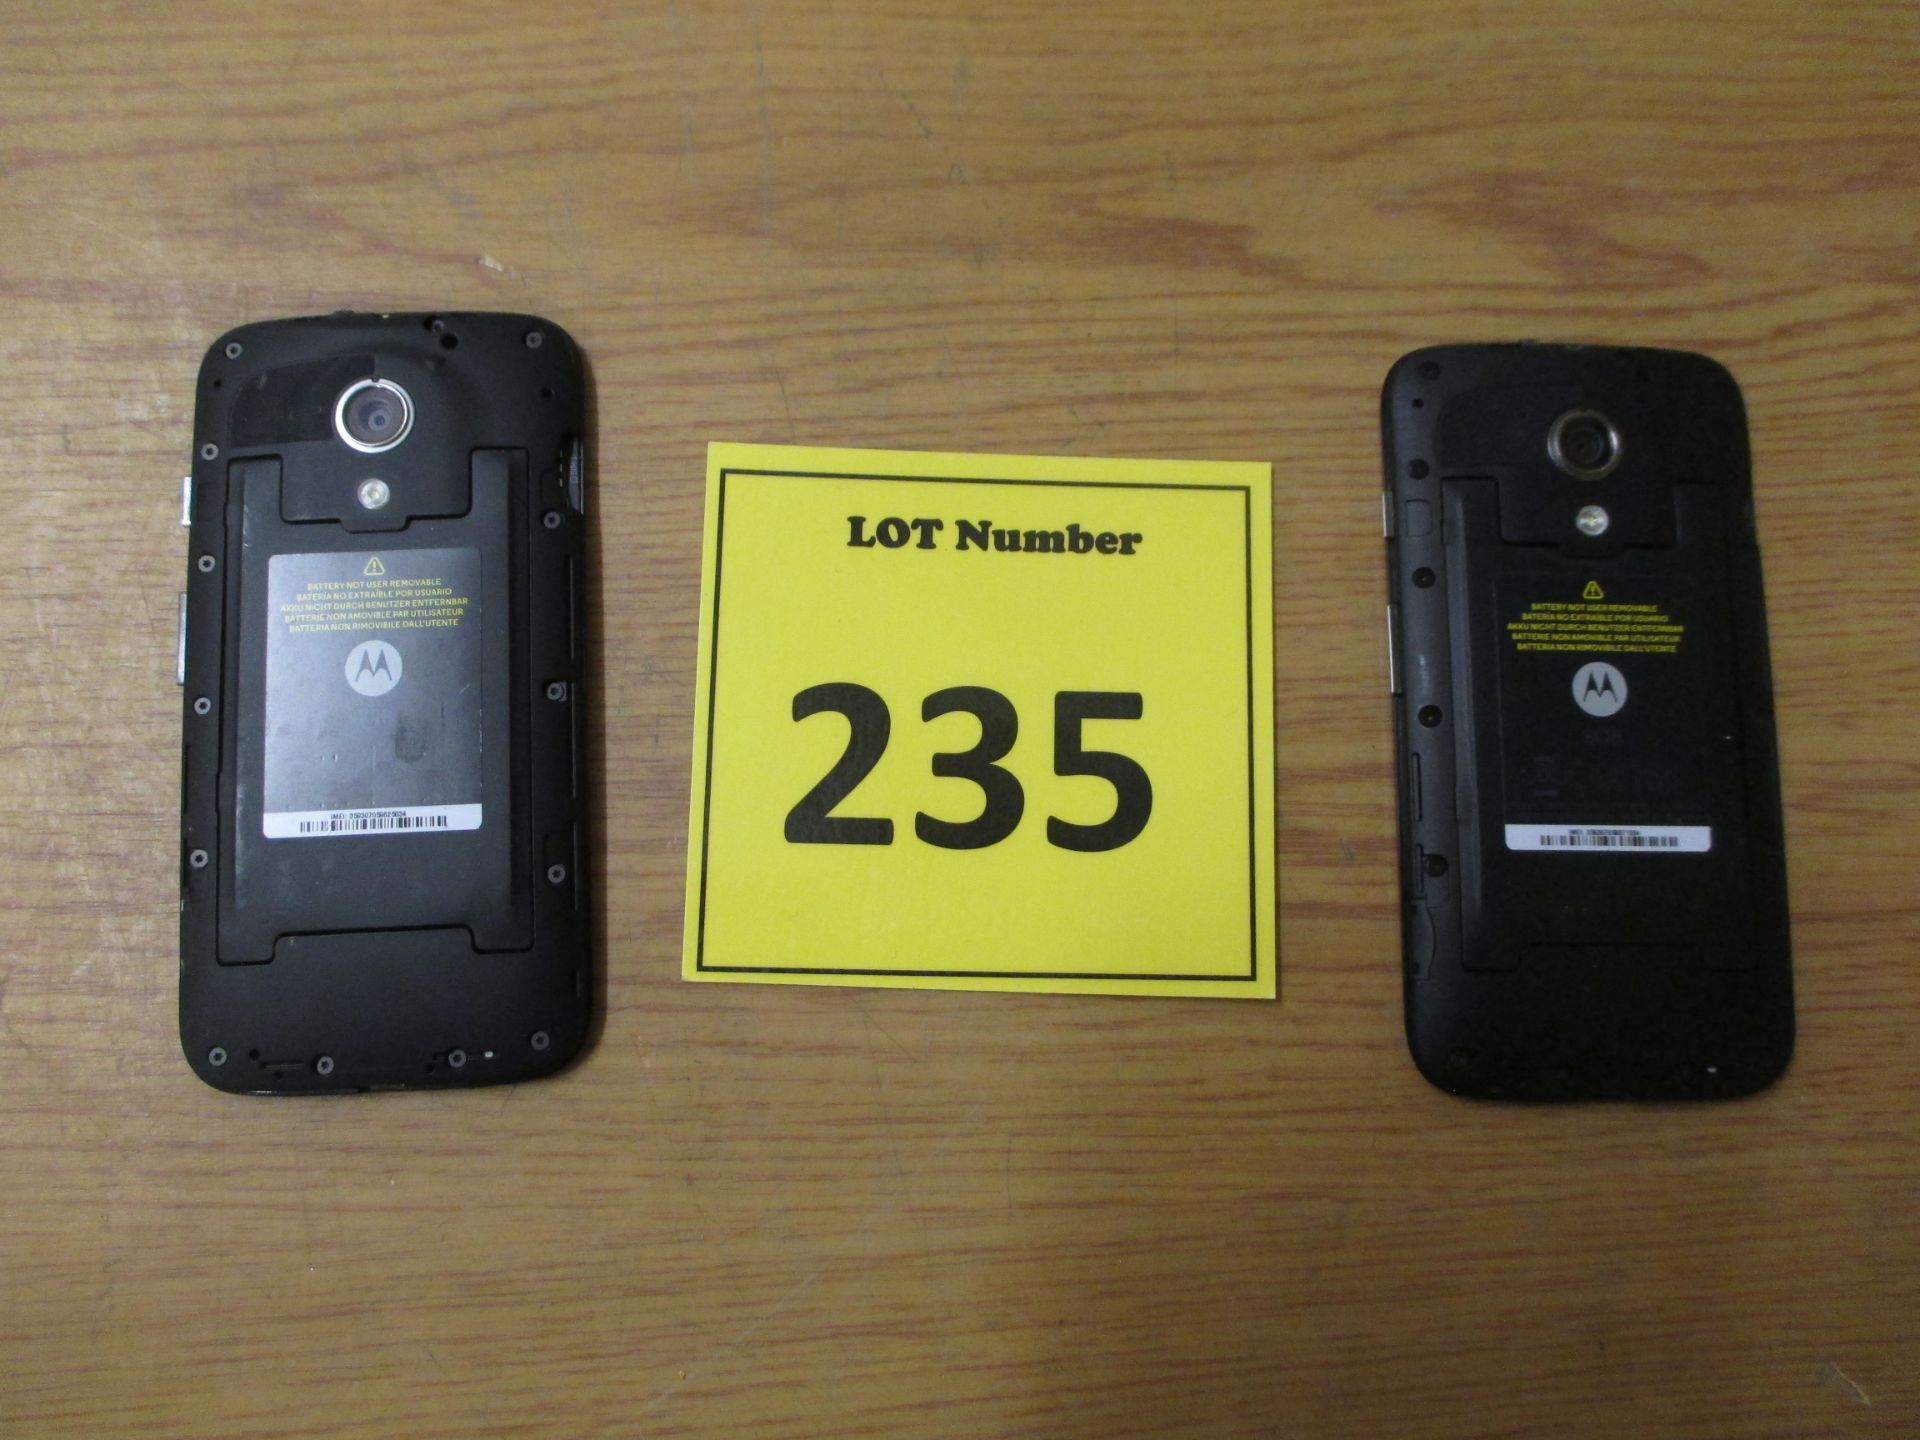 2 X MOTOROLA MOTO G 8GB SMARTPHONES (MISSING BACK COVER) - Image 2 of 2